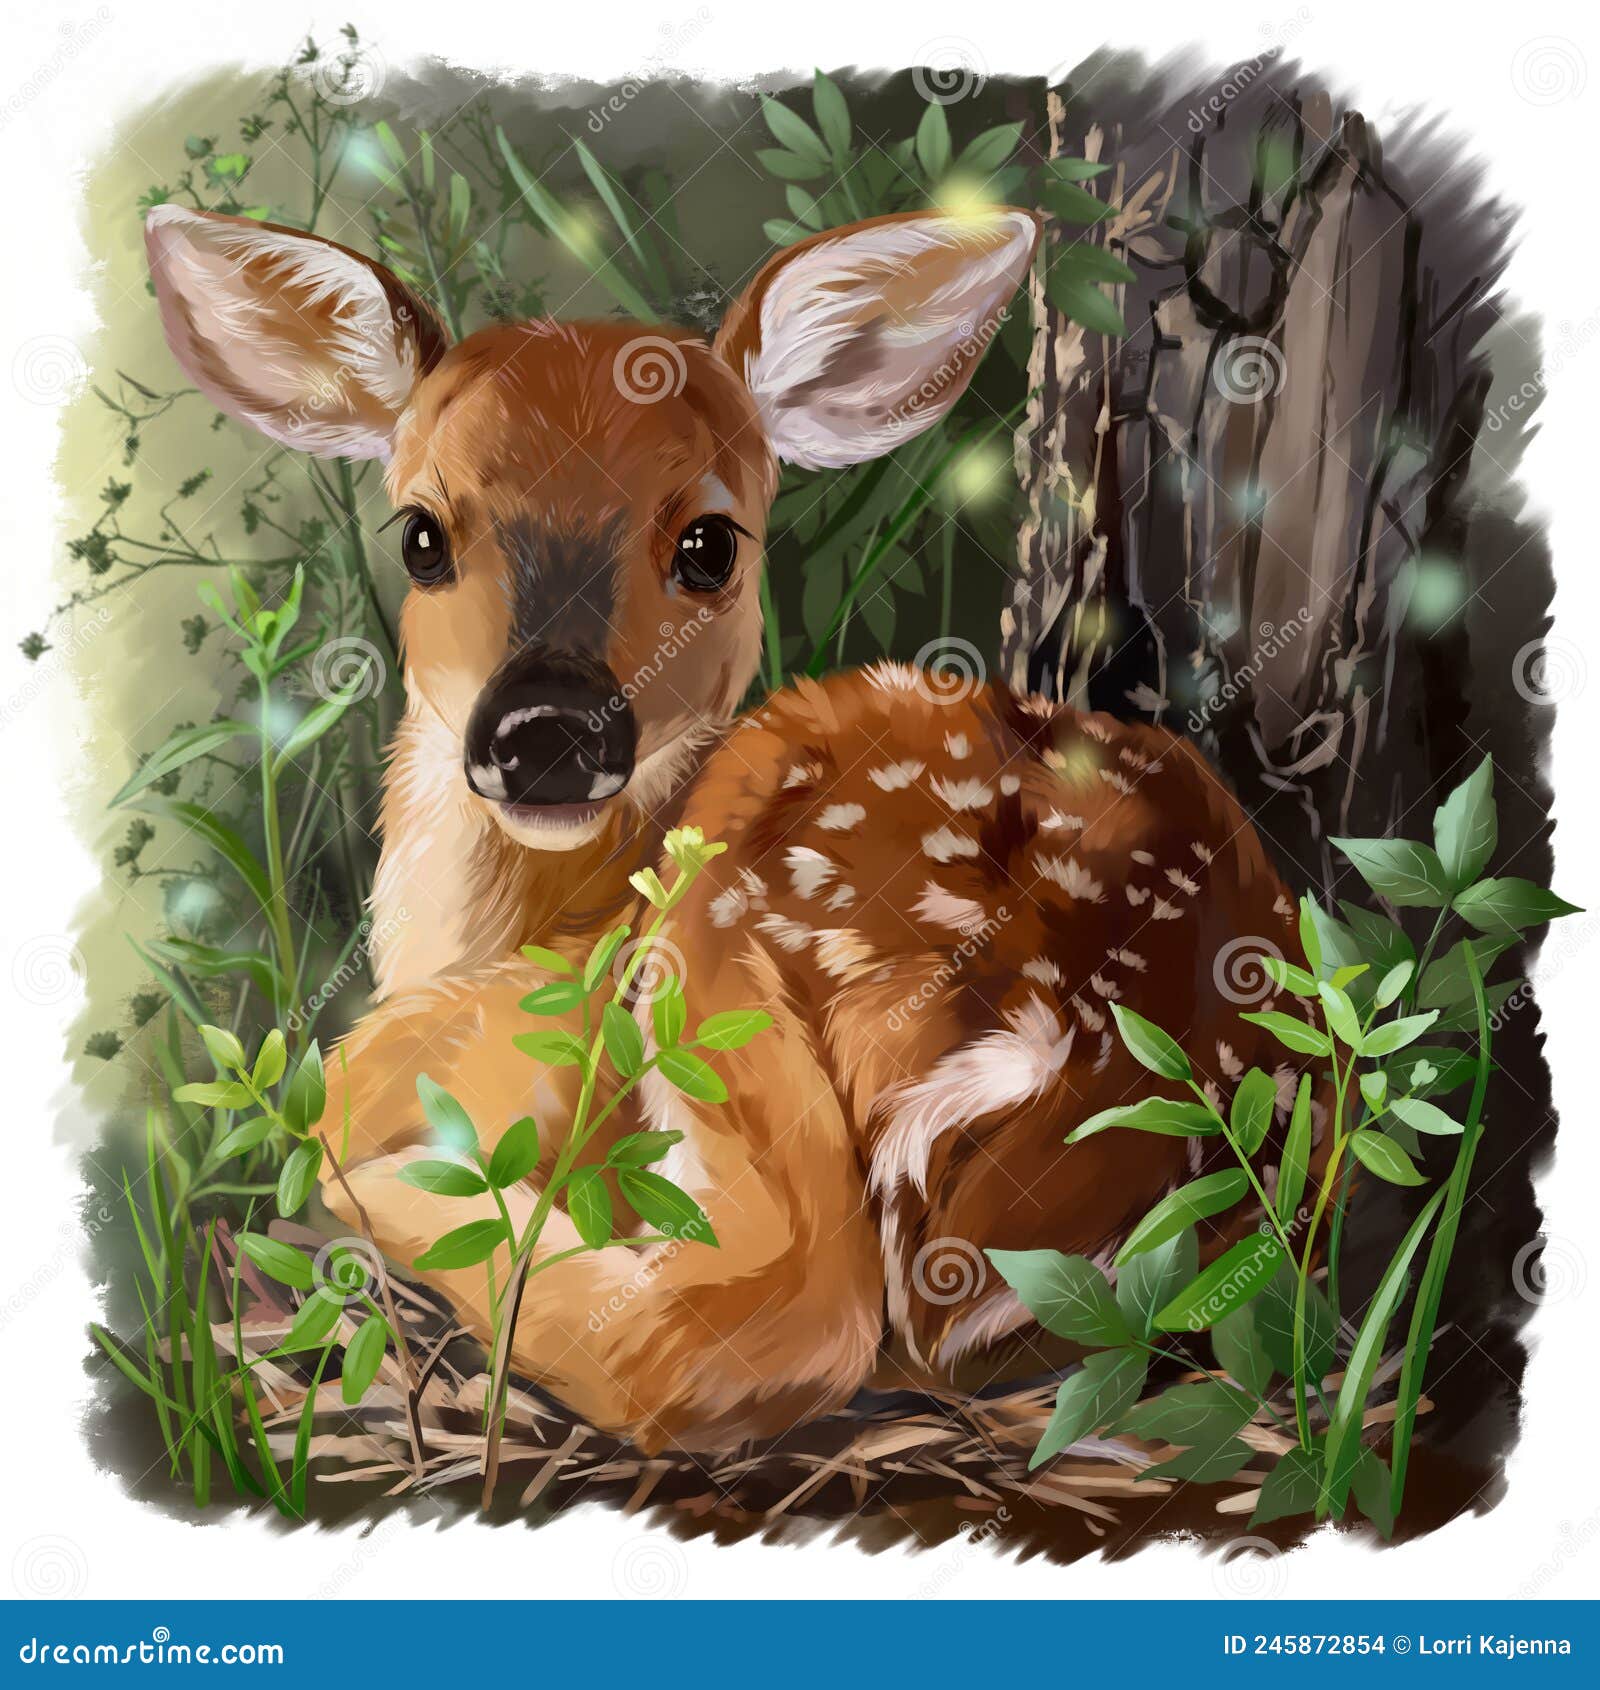 cute deer lies in the grass. watercolor drawing